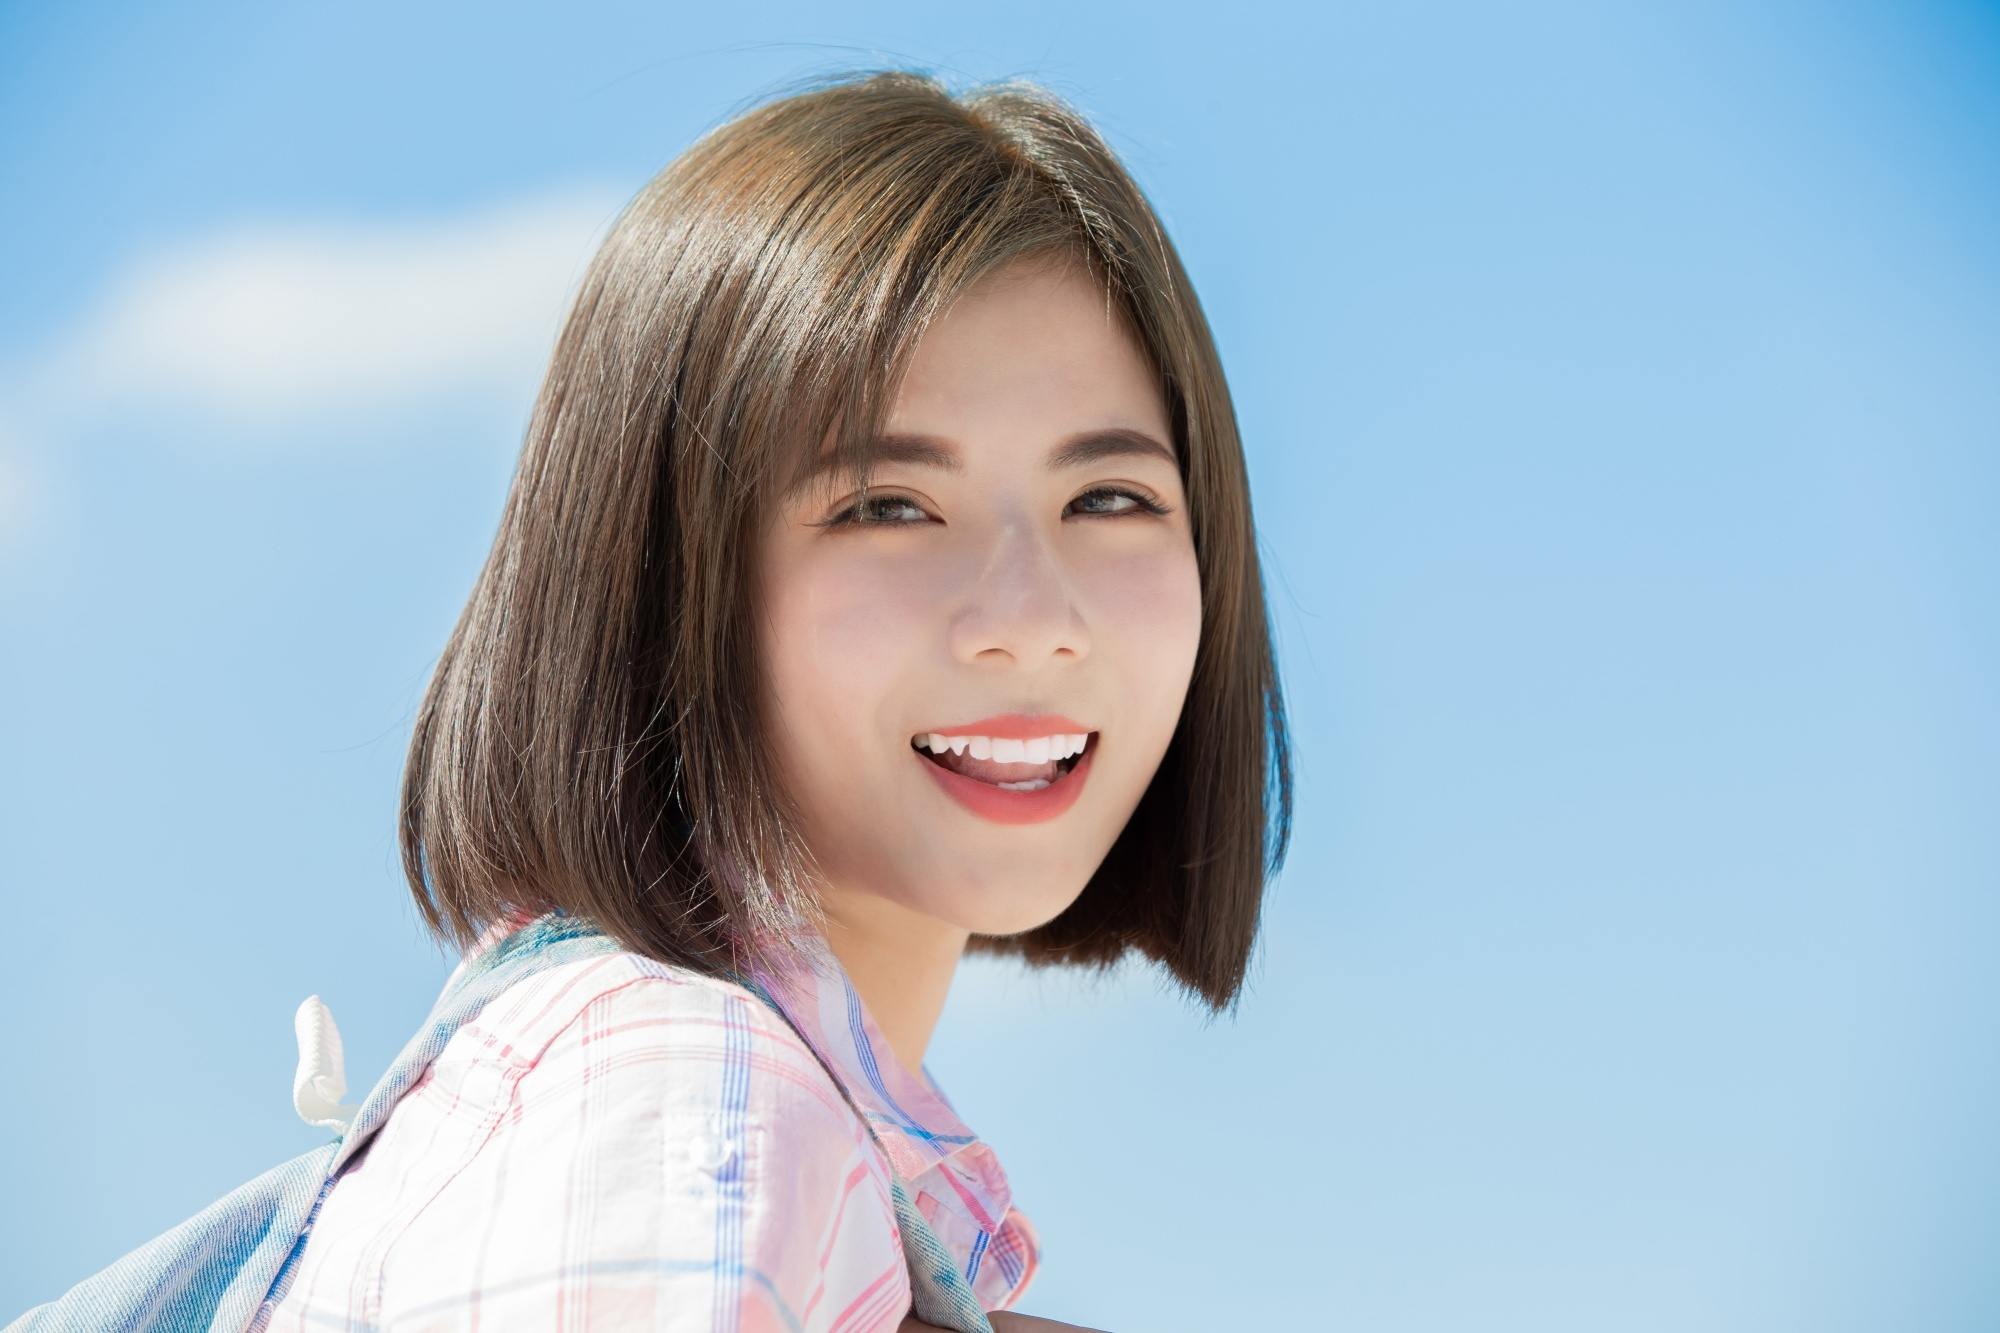 10 Flattering Korean-inspired Short Hairstyles With Bangs